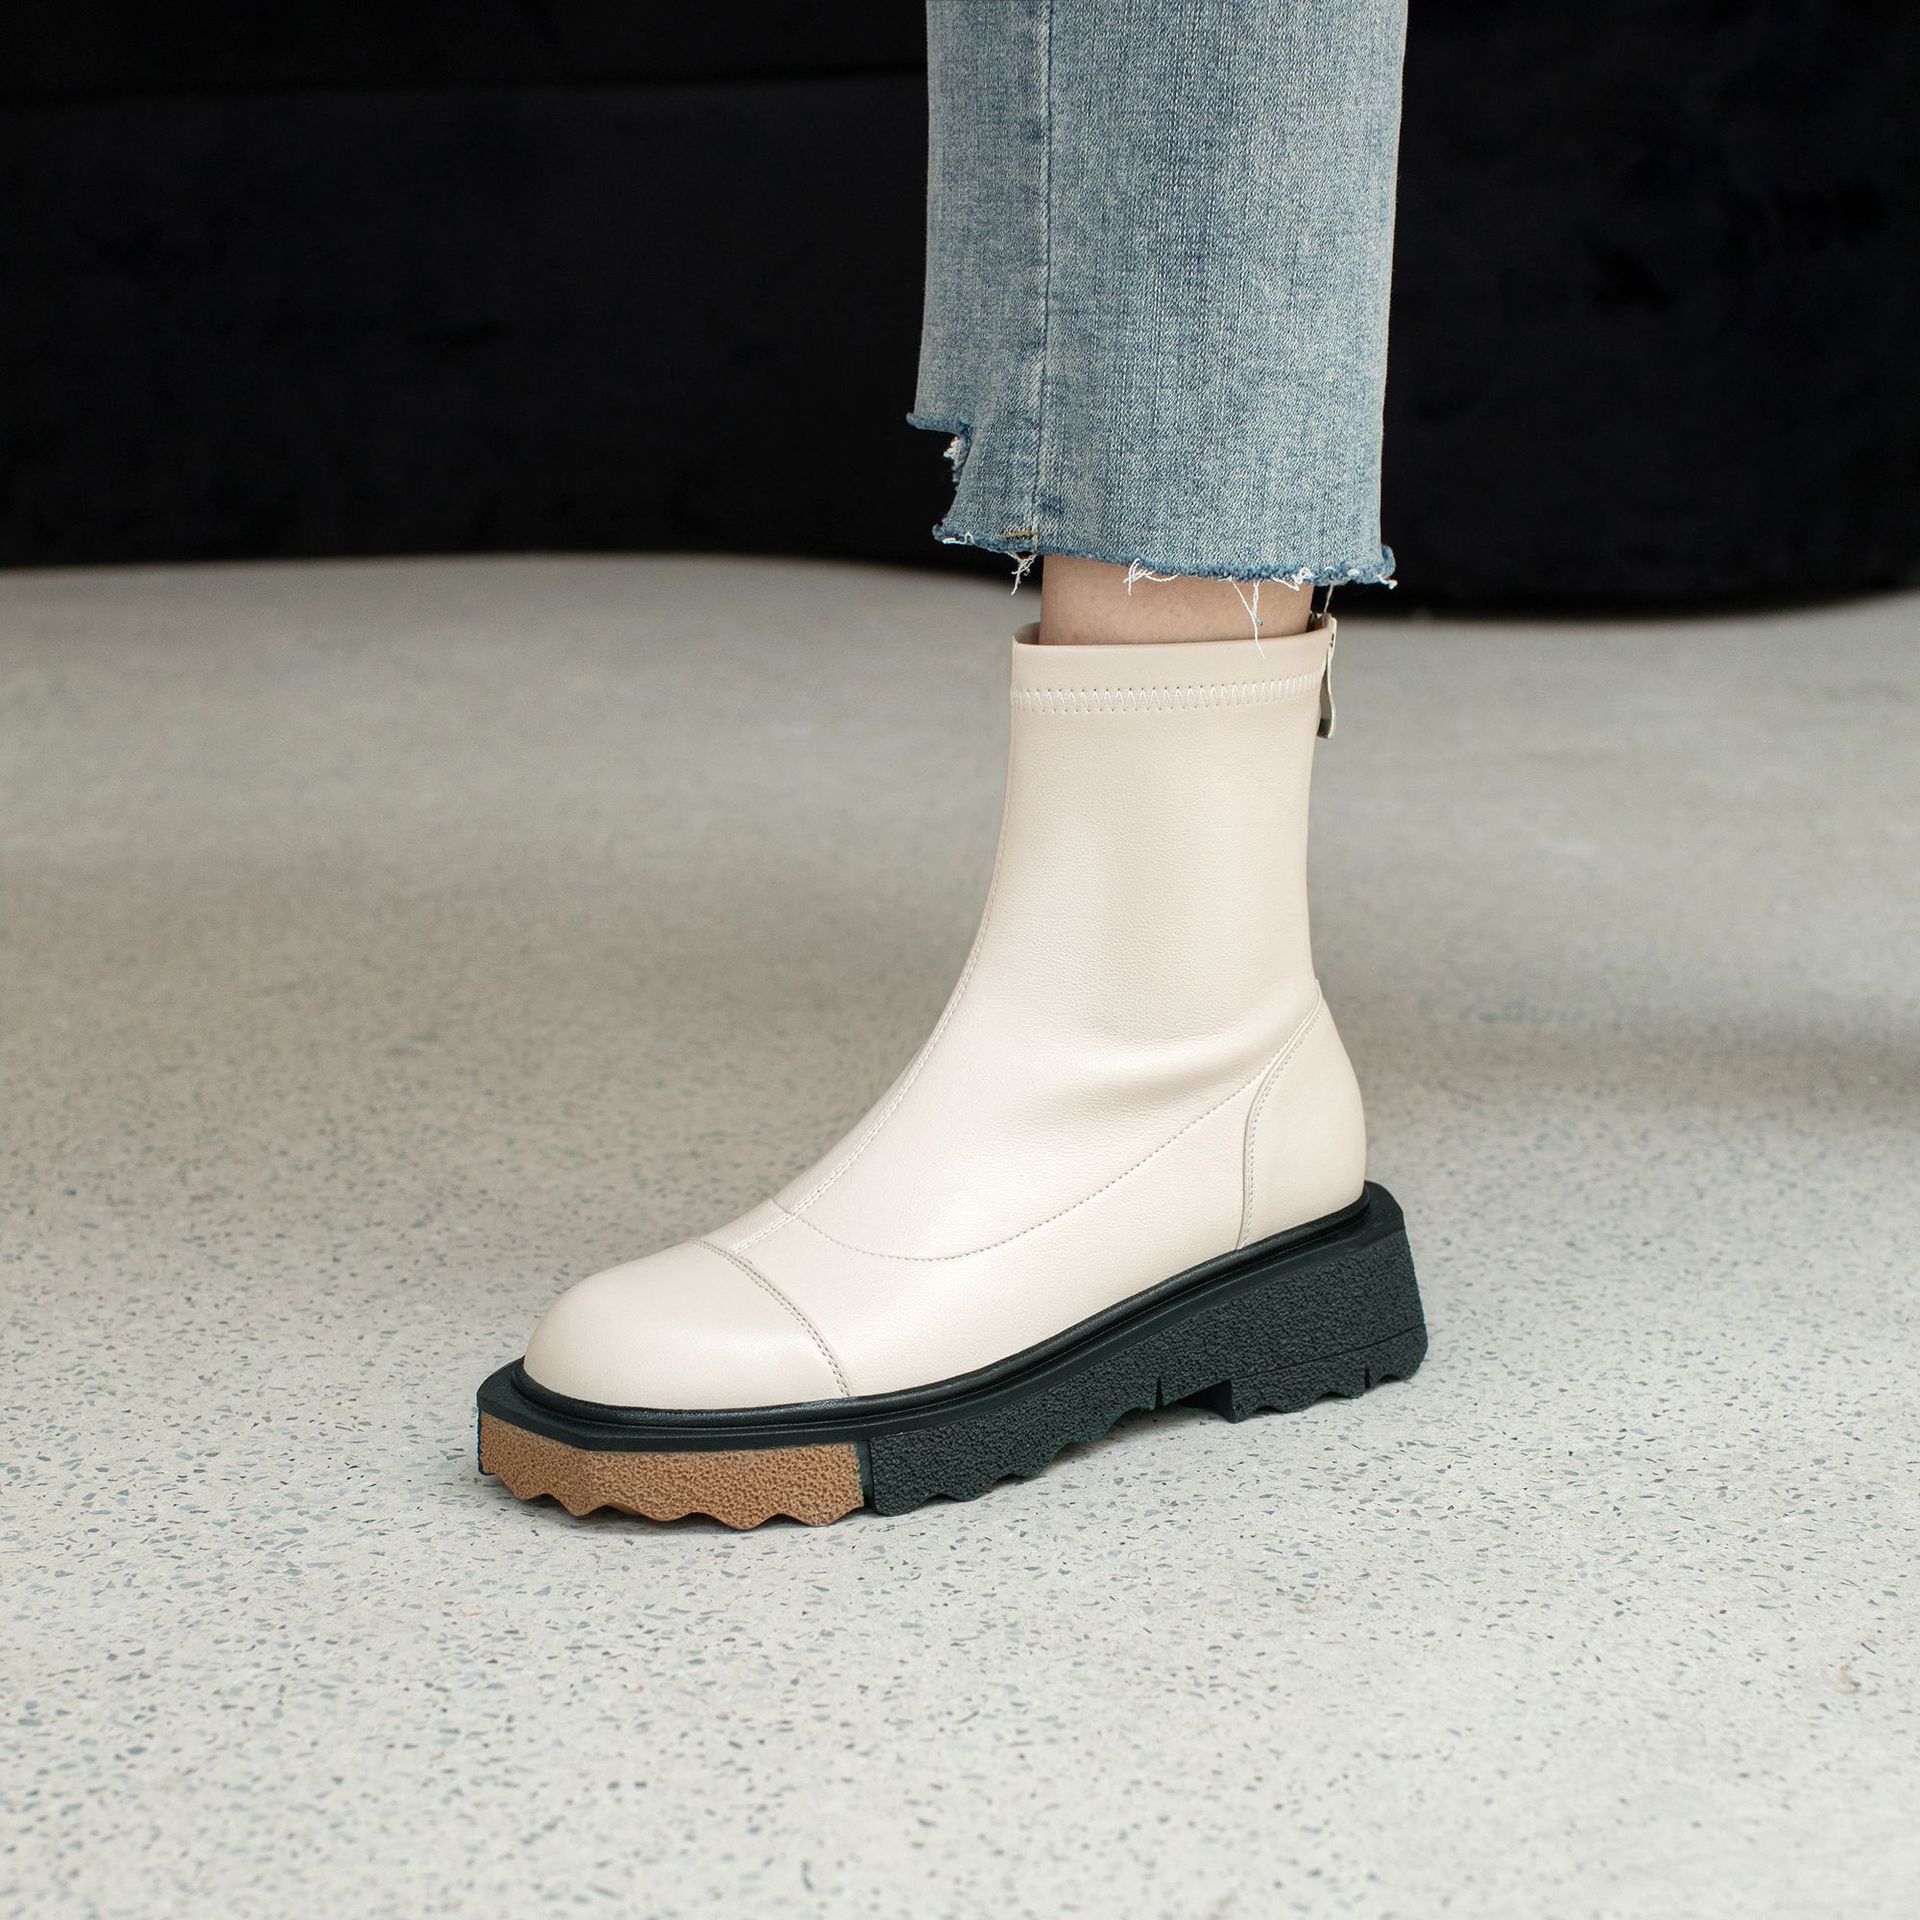 Chiko Lanae Round Toe Block Heels Boots